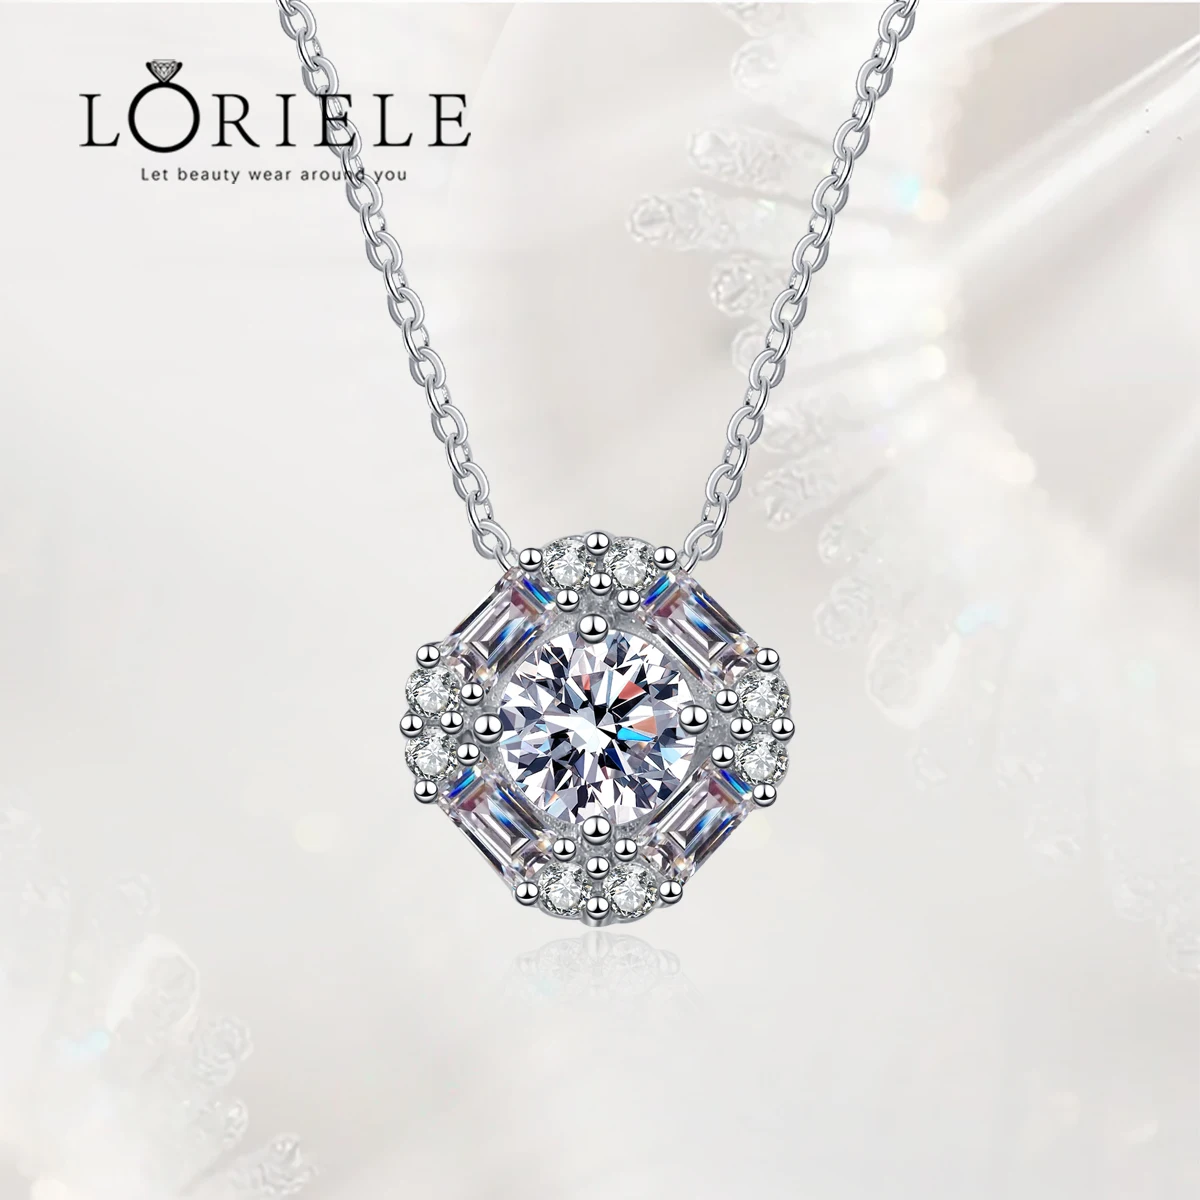 

LORIELE Moissanite Square Pendant Necklace Center Round Cut Diamond Emerald Cut Halo Design Necklace 14K Plated Silver Jewelry